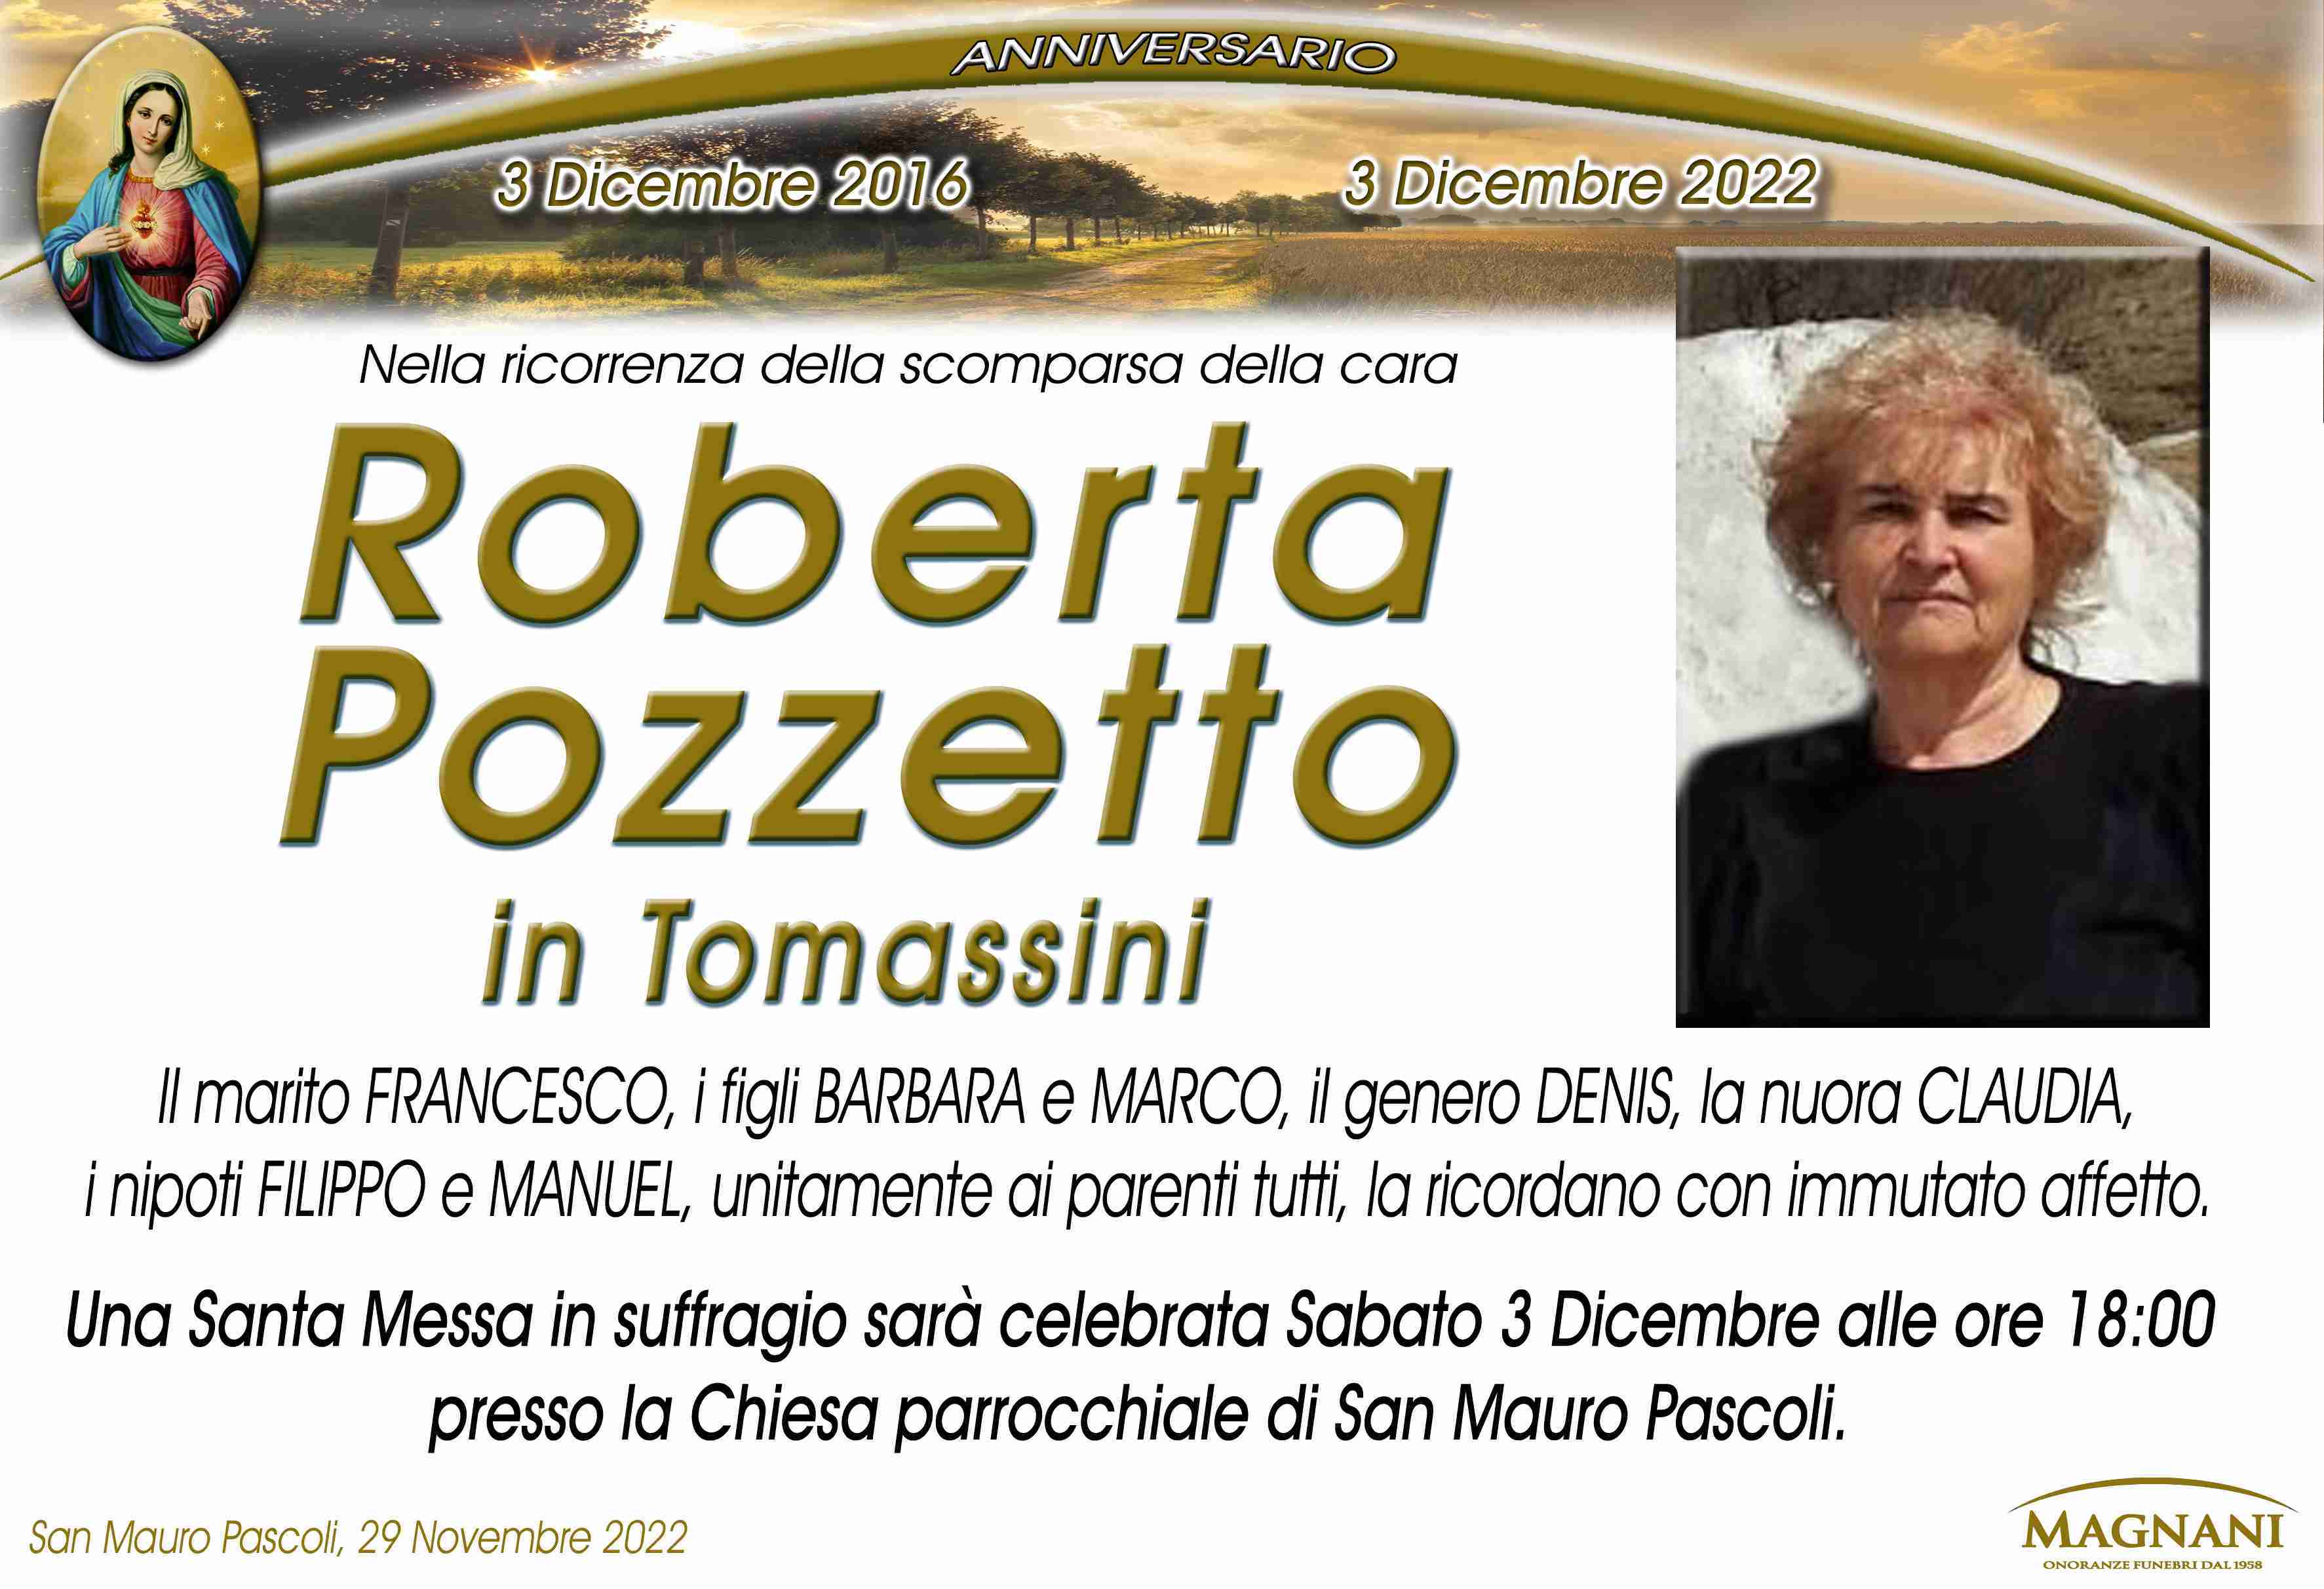 Roberta Pozzetto